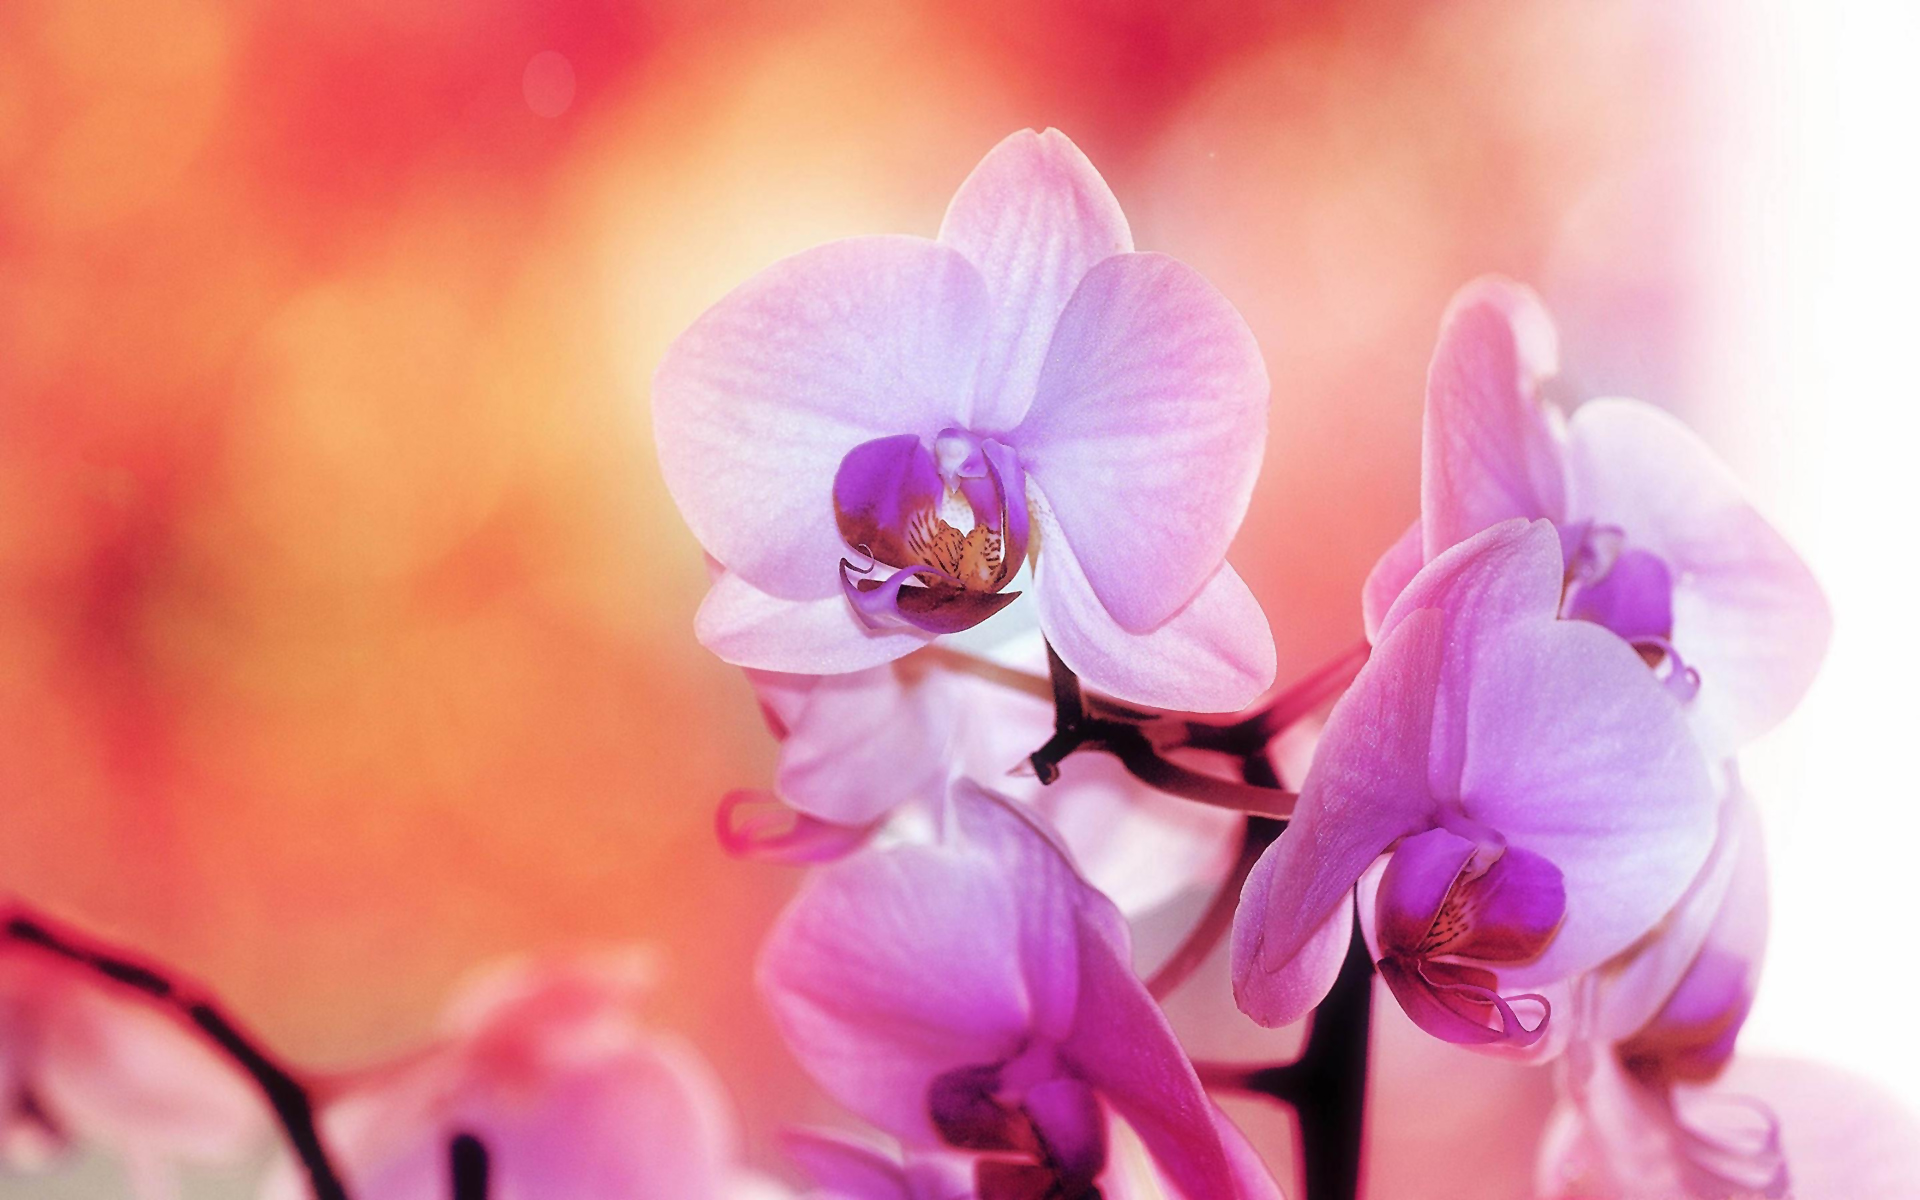 purple white orchids